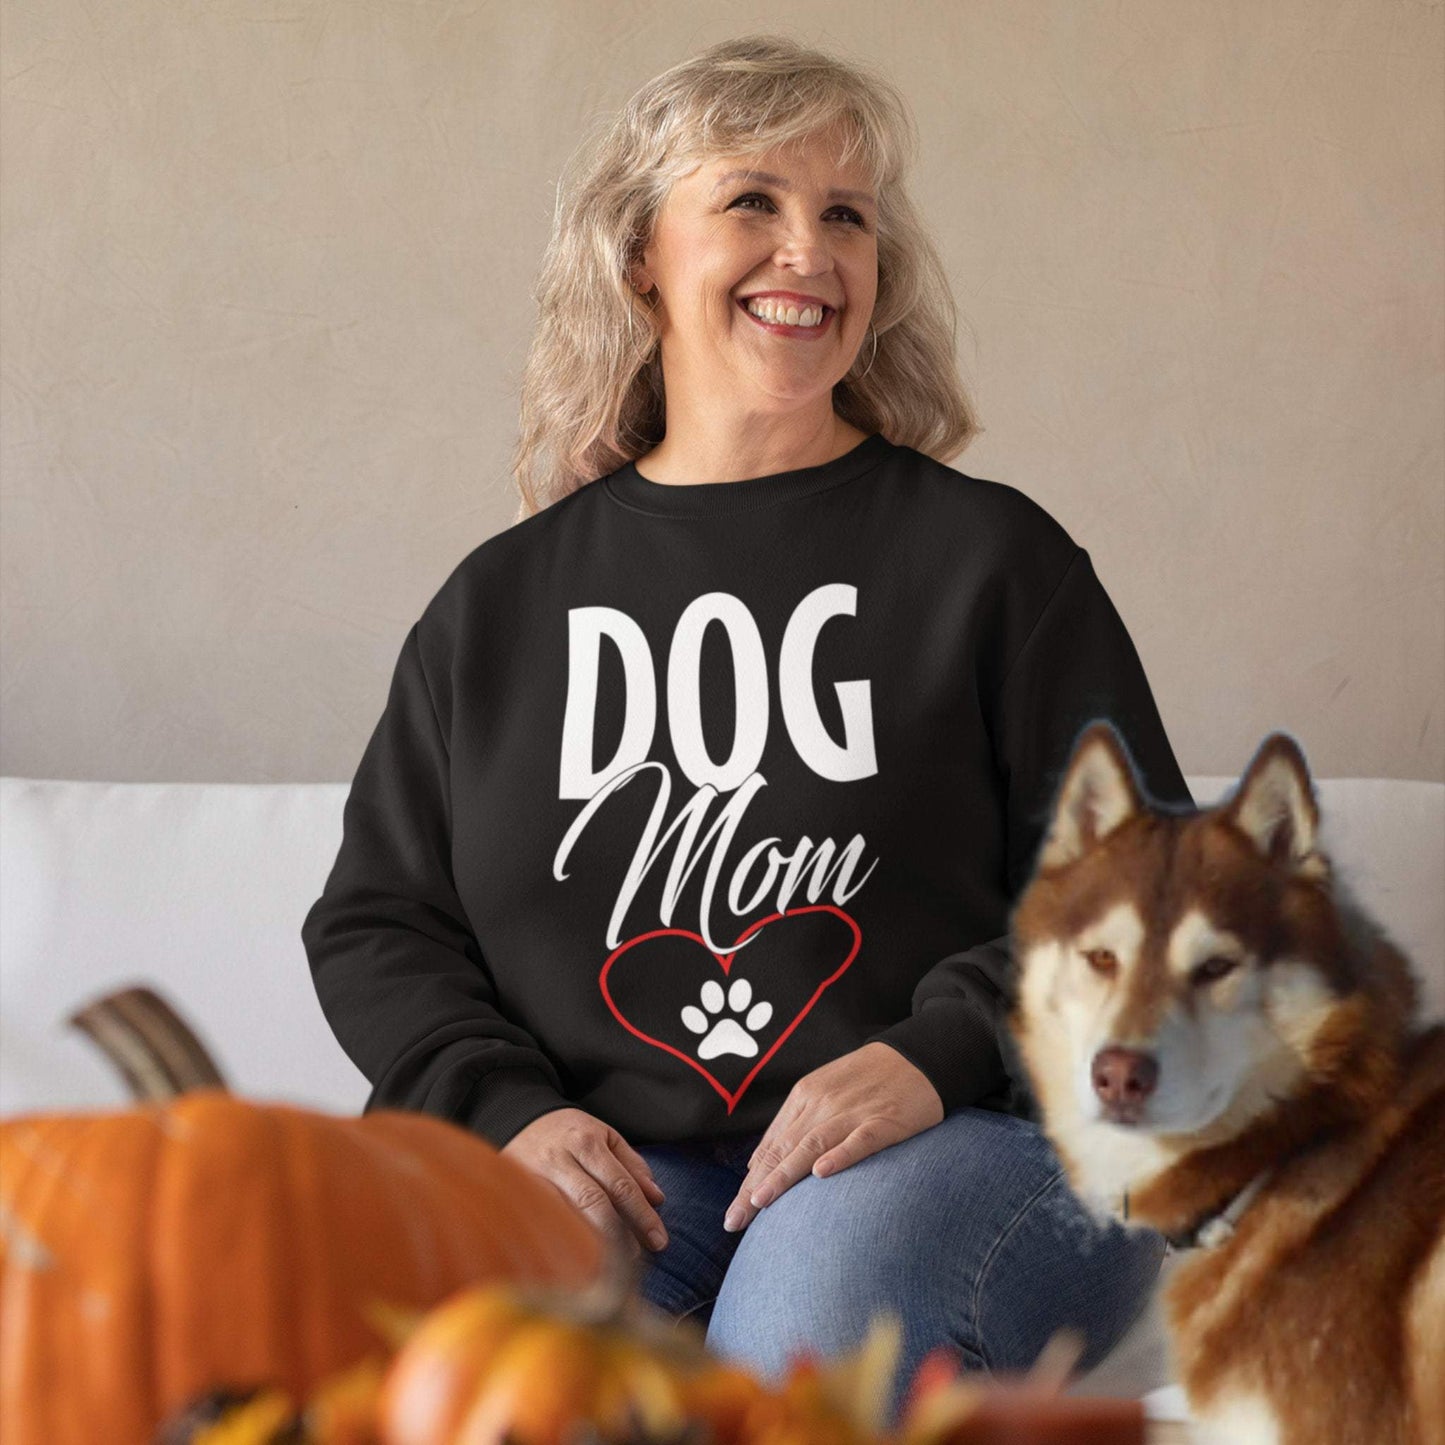 Dog Mom - Damen Premium Organic Bio Sweatshirt Pullover